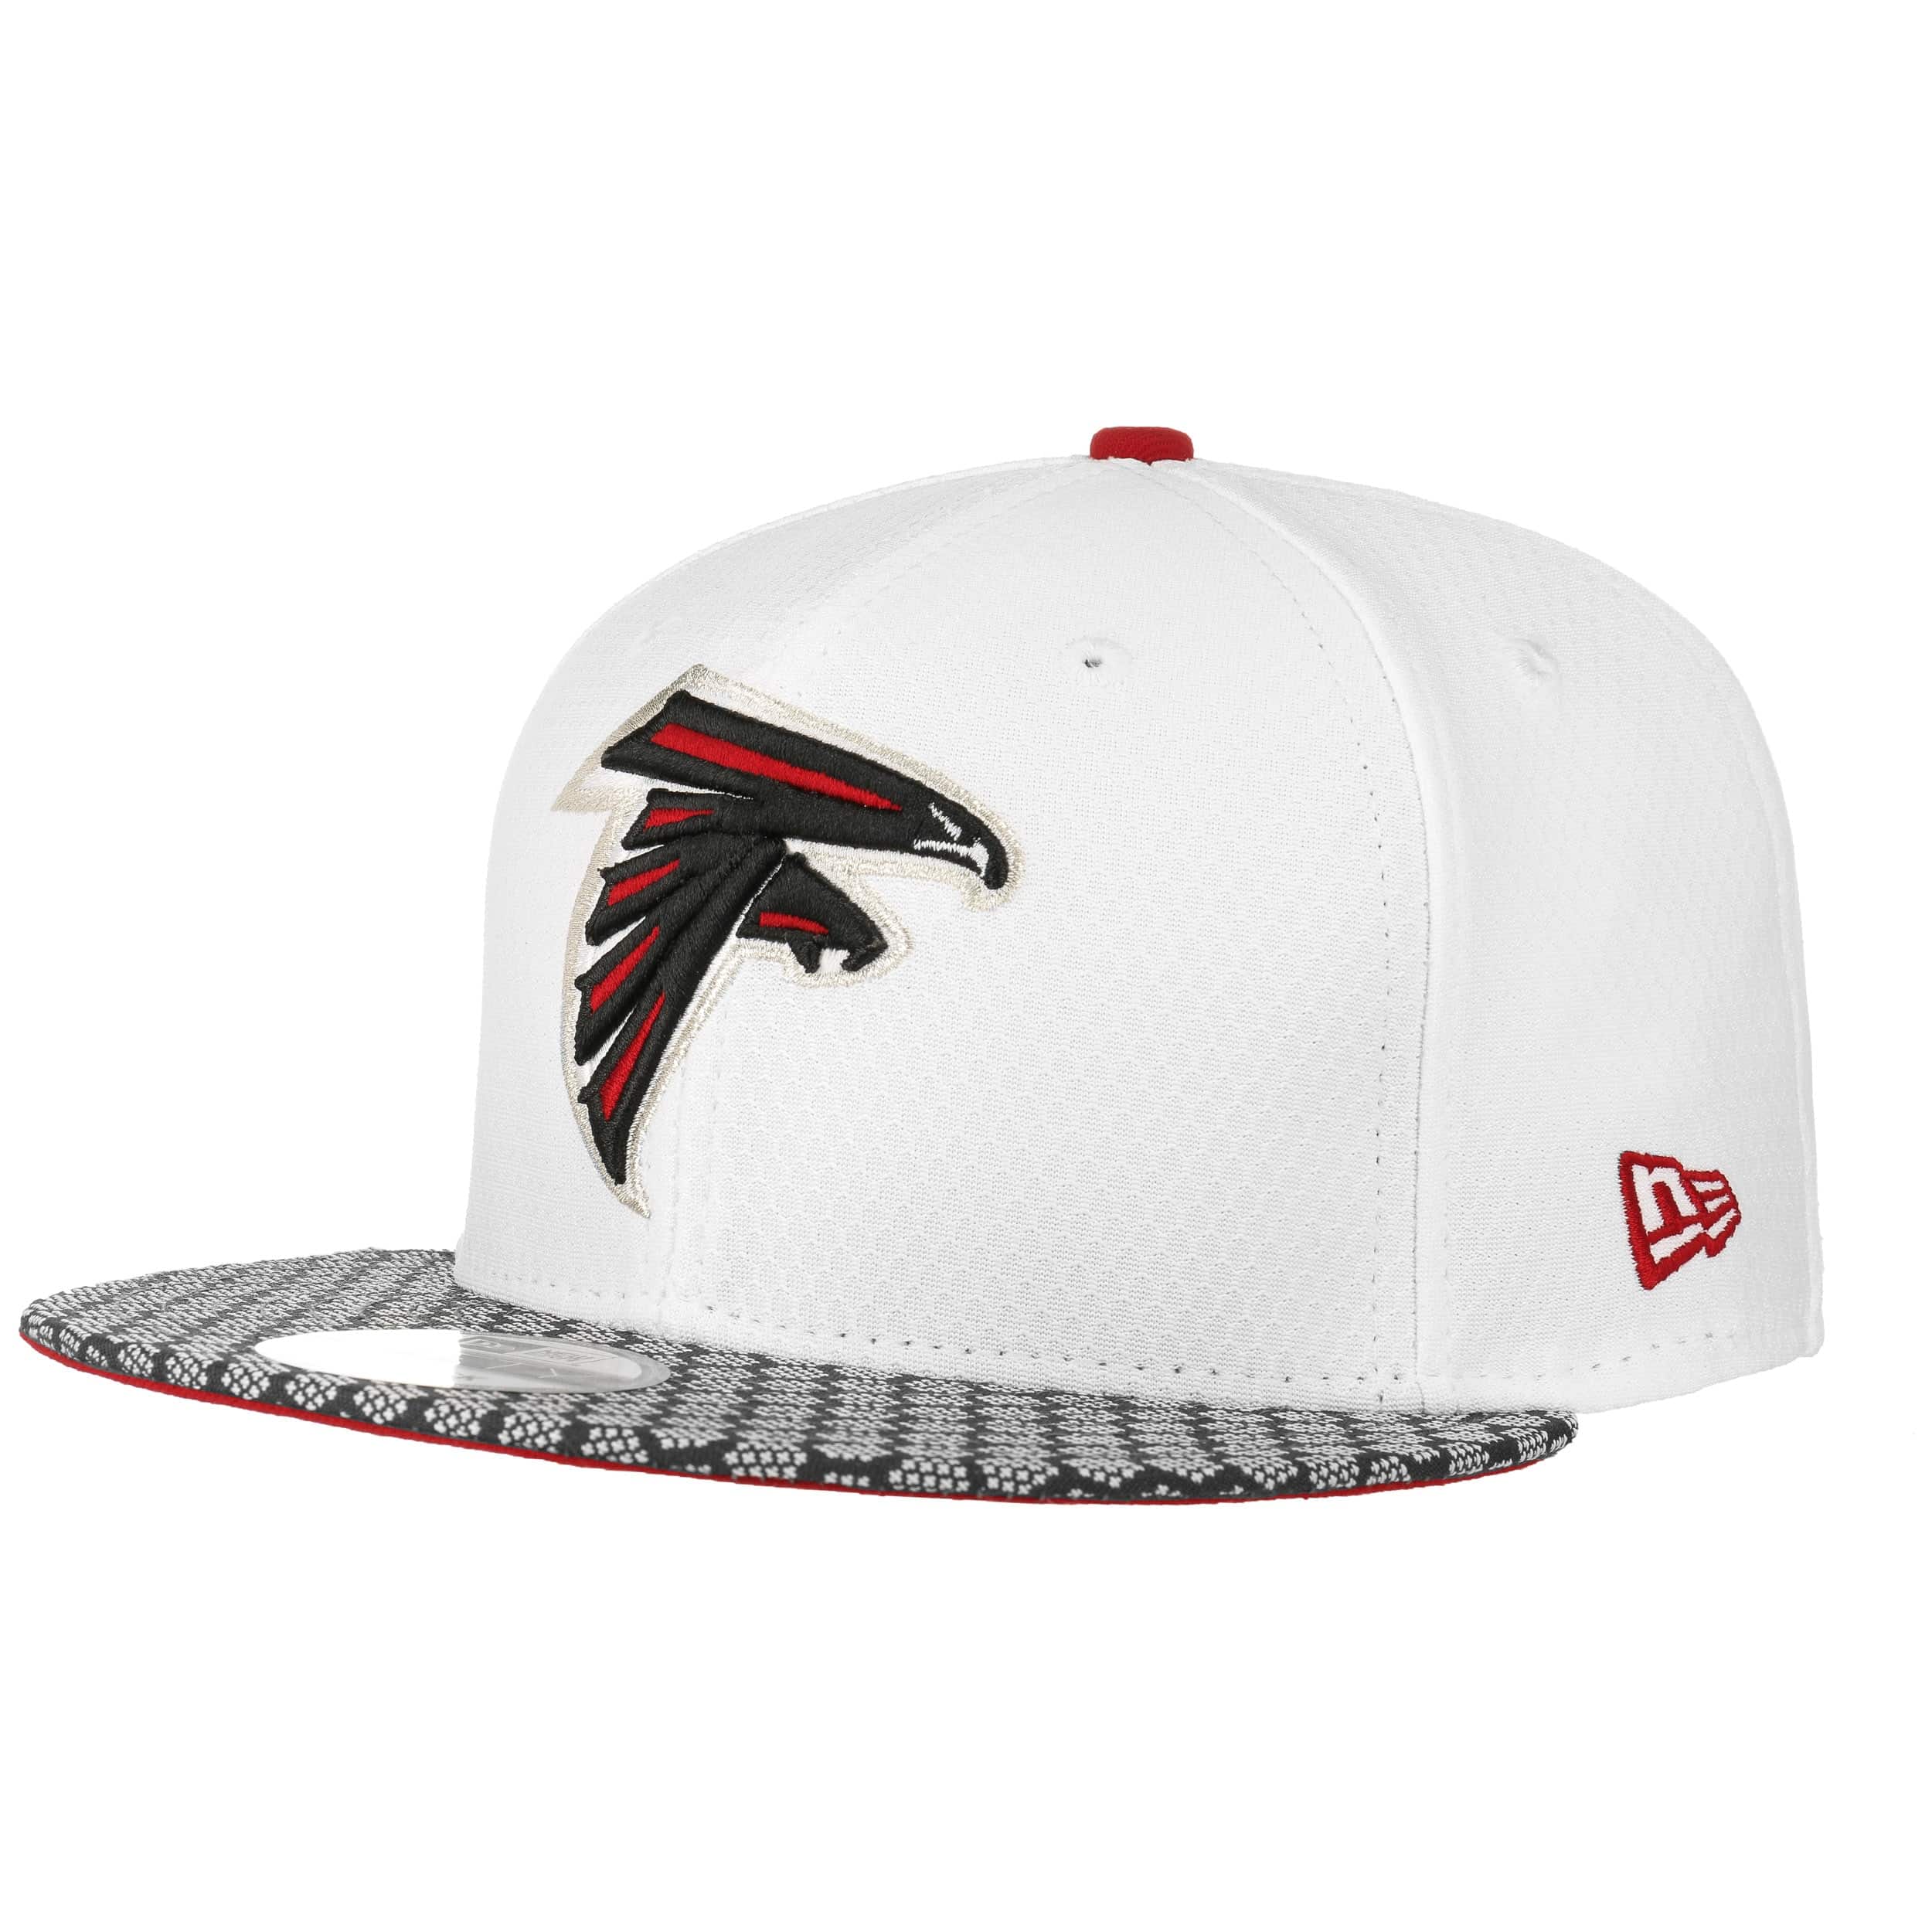 New Era 9FIFTY NFL Atlanta Falcons Basic Snapback Hat